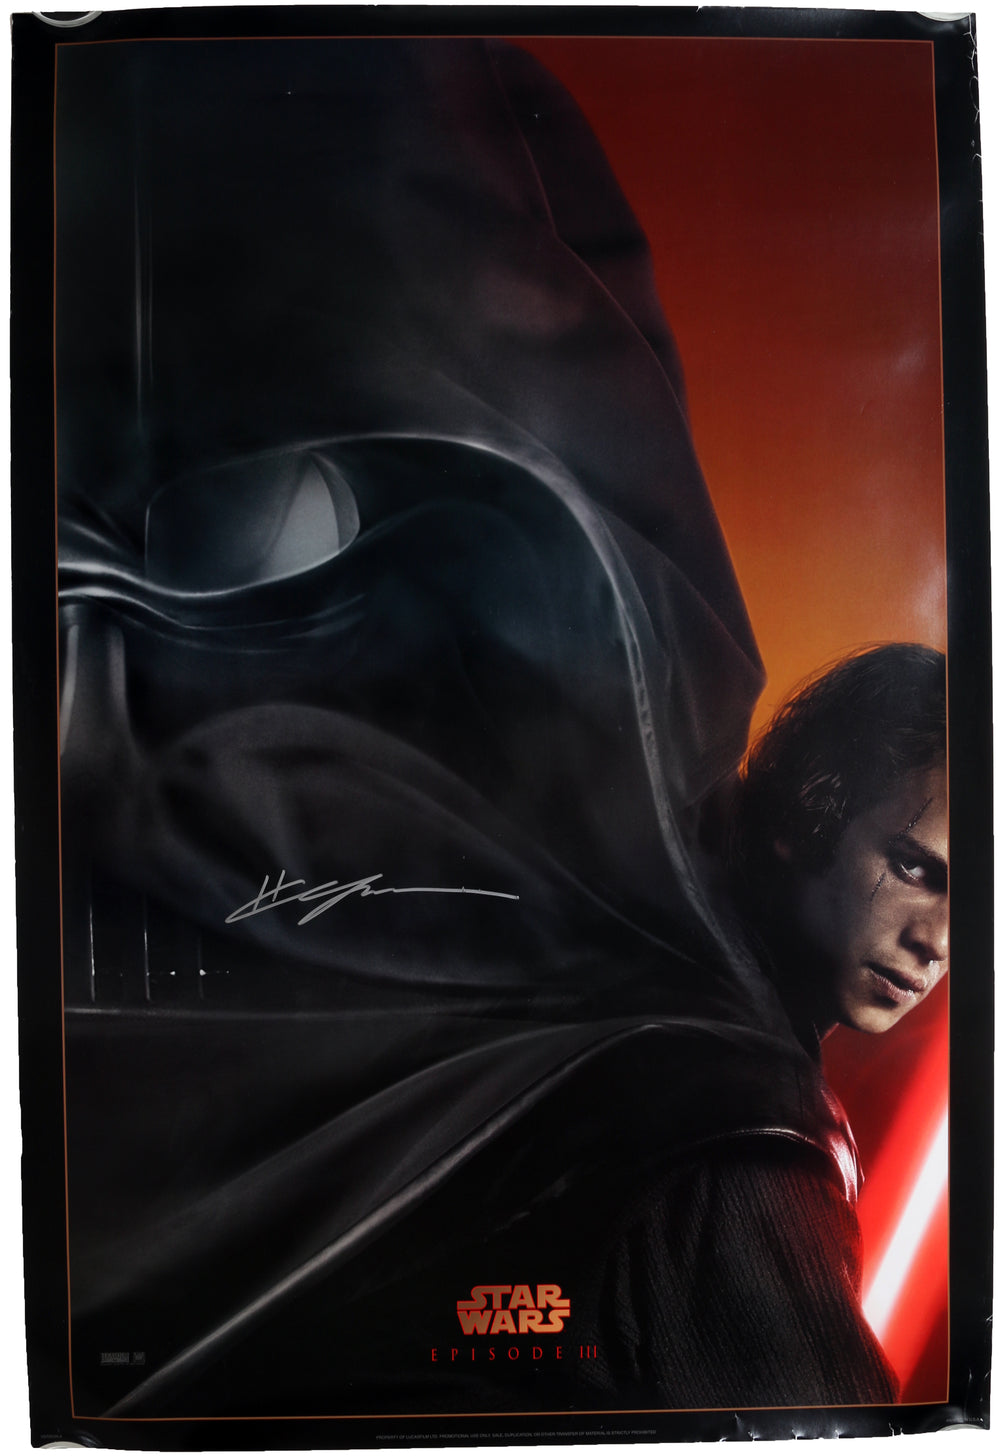 Hayden Christensen as Anakin Skywalker in Star Wars Episode III: Revenge of the Sith Signed Poster